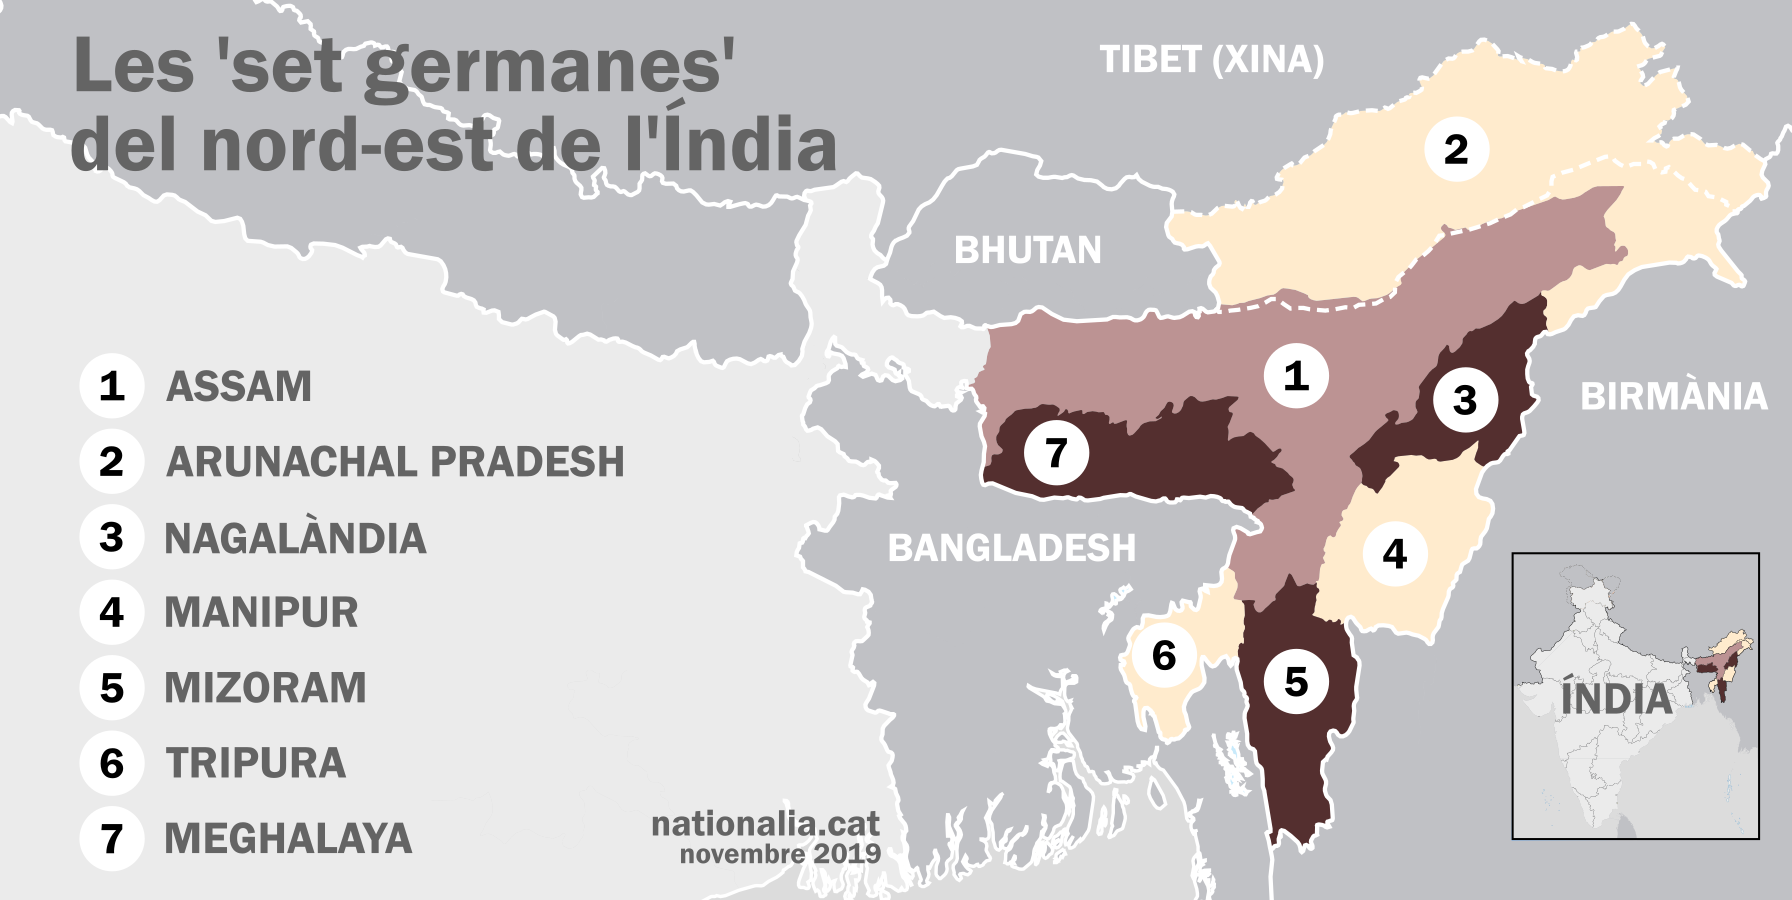 BANGLADESH AND BHUTAN INDE DU NORD EST INDIA NORTHEAST